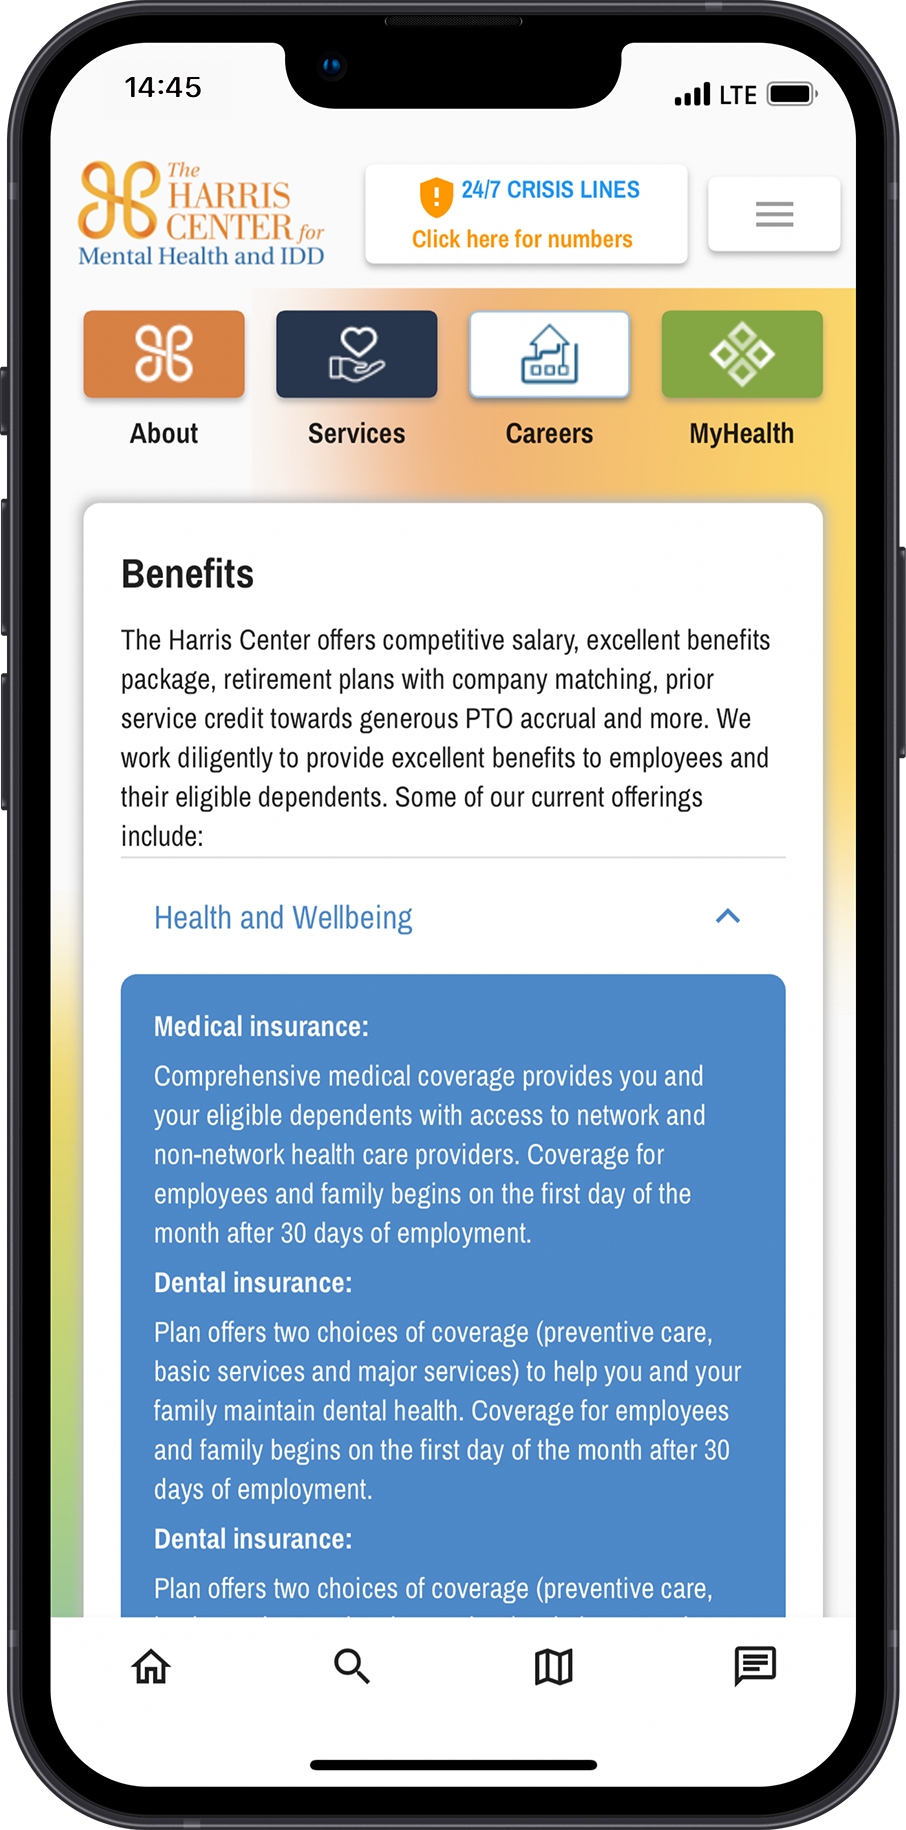 Harris Center App: Benefits Screen